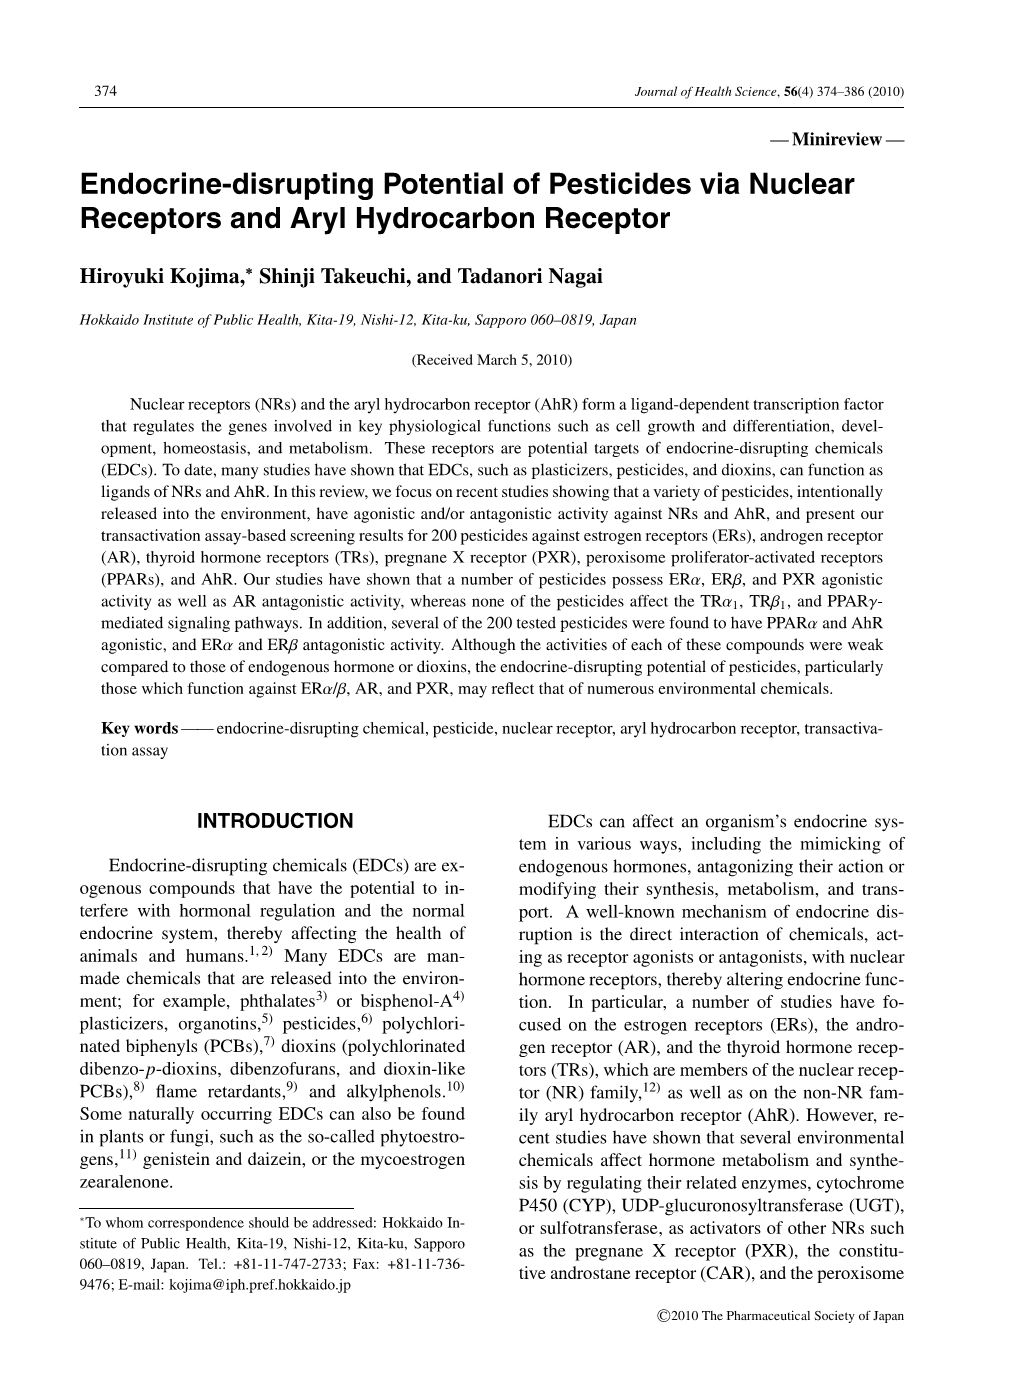 Endocrine-Disrupting Potential of Pesticides Via Nuclear Receptors and Aryl Hydrocarbon Receptor